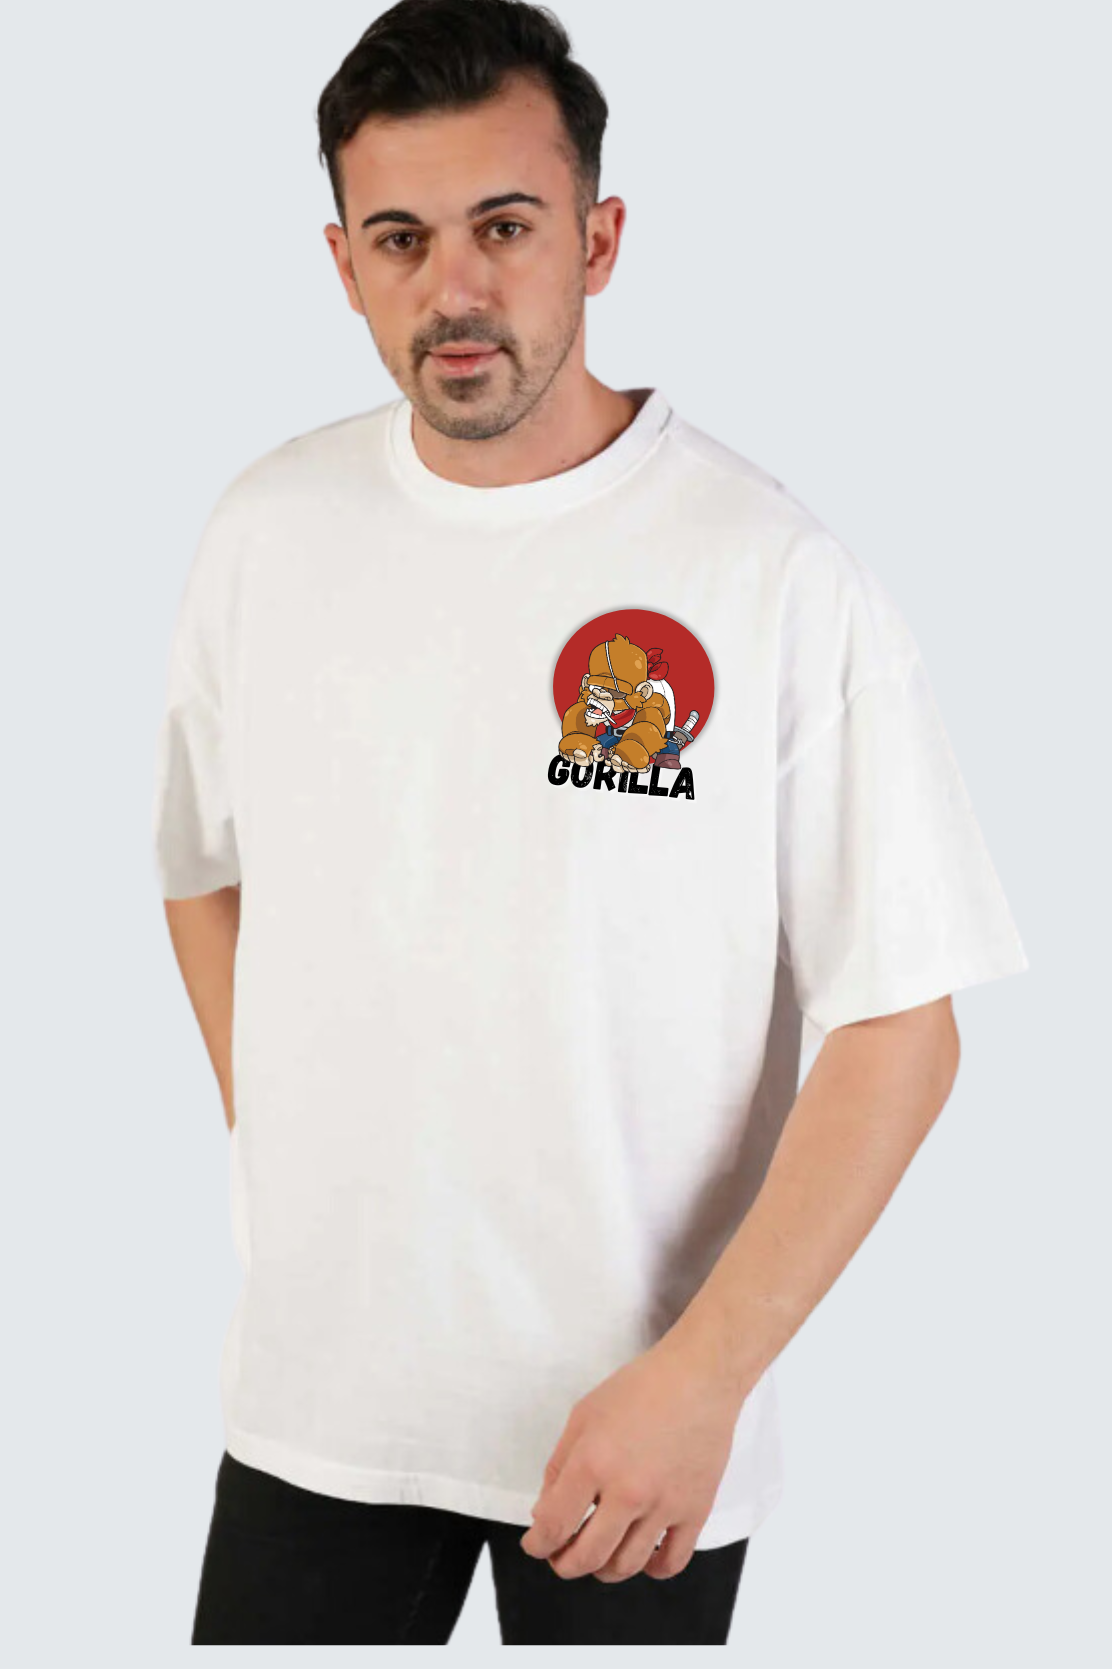 Gorilla oversized pure cotton tshirt